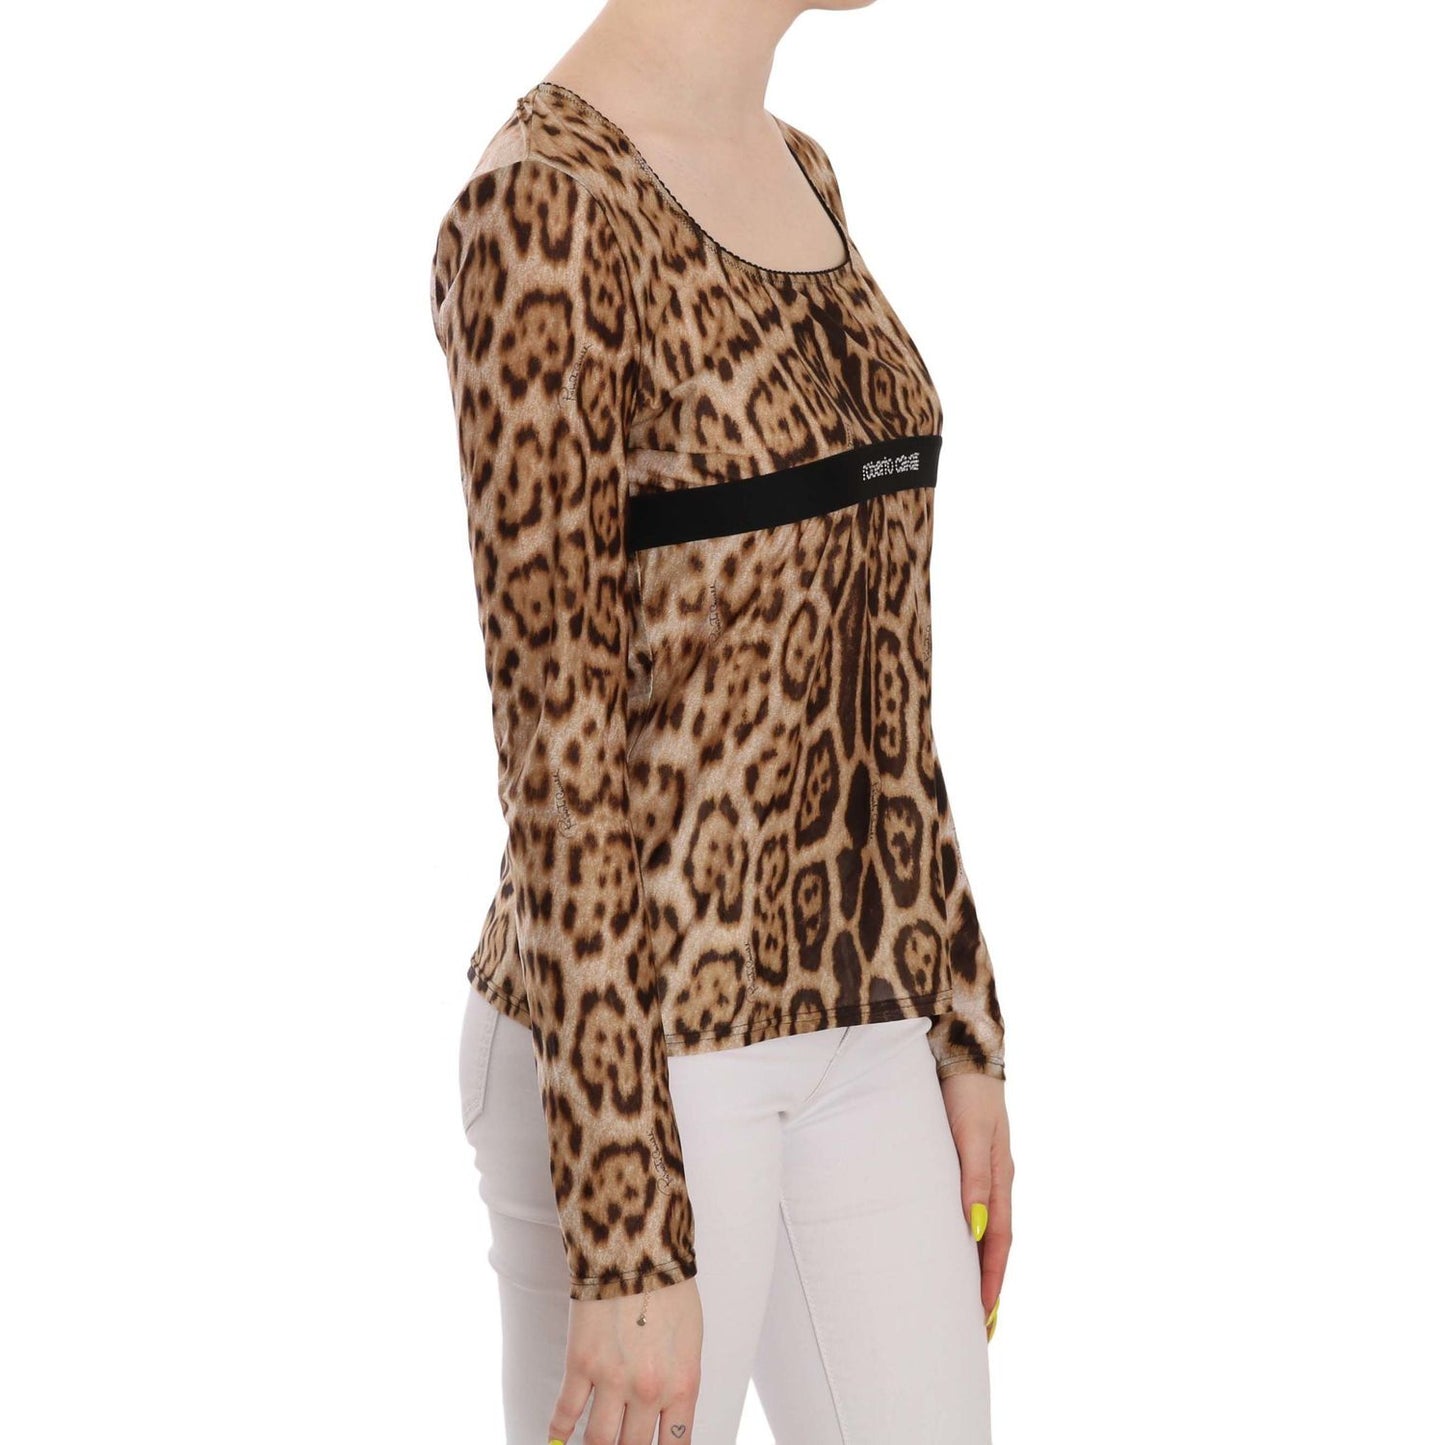 Roberto Cavalli Elegant Leopard Long Sleeve Top brown-round-neck-leopard-women-top-blouse IMG_0392-1-scaled-ab4b95cf-8a0.jpg